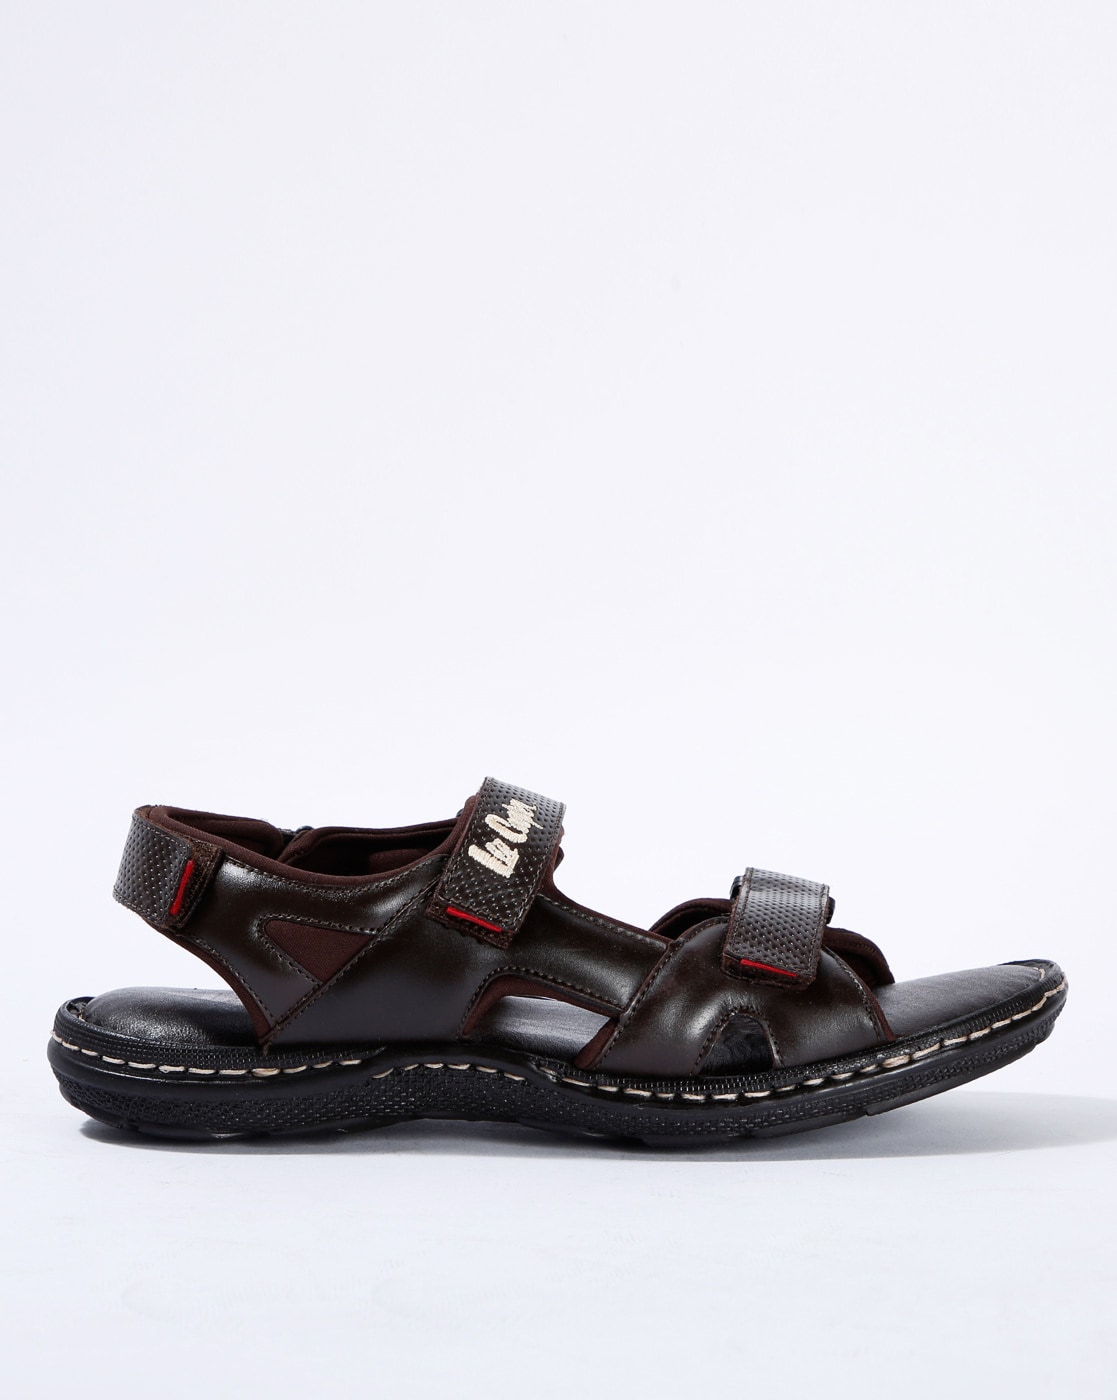 lee cooper sandals online shopping